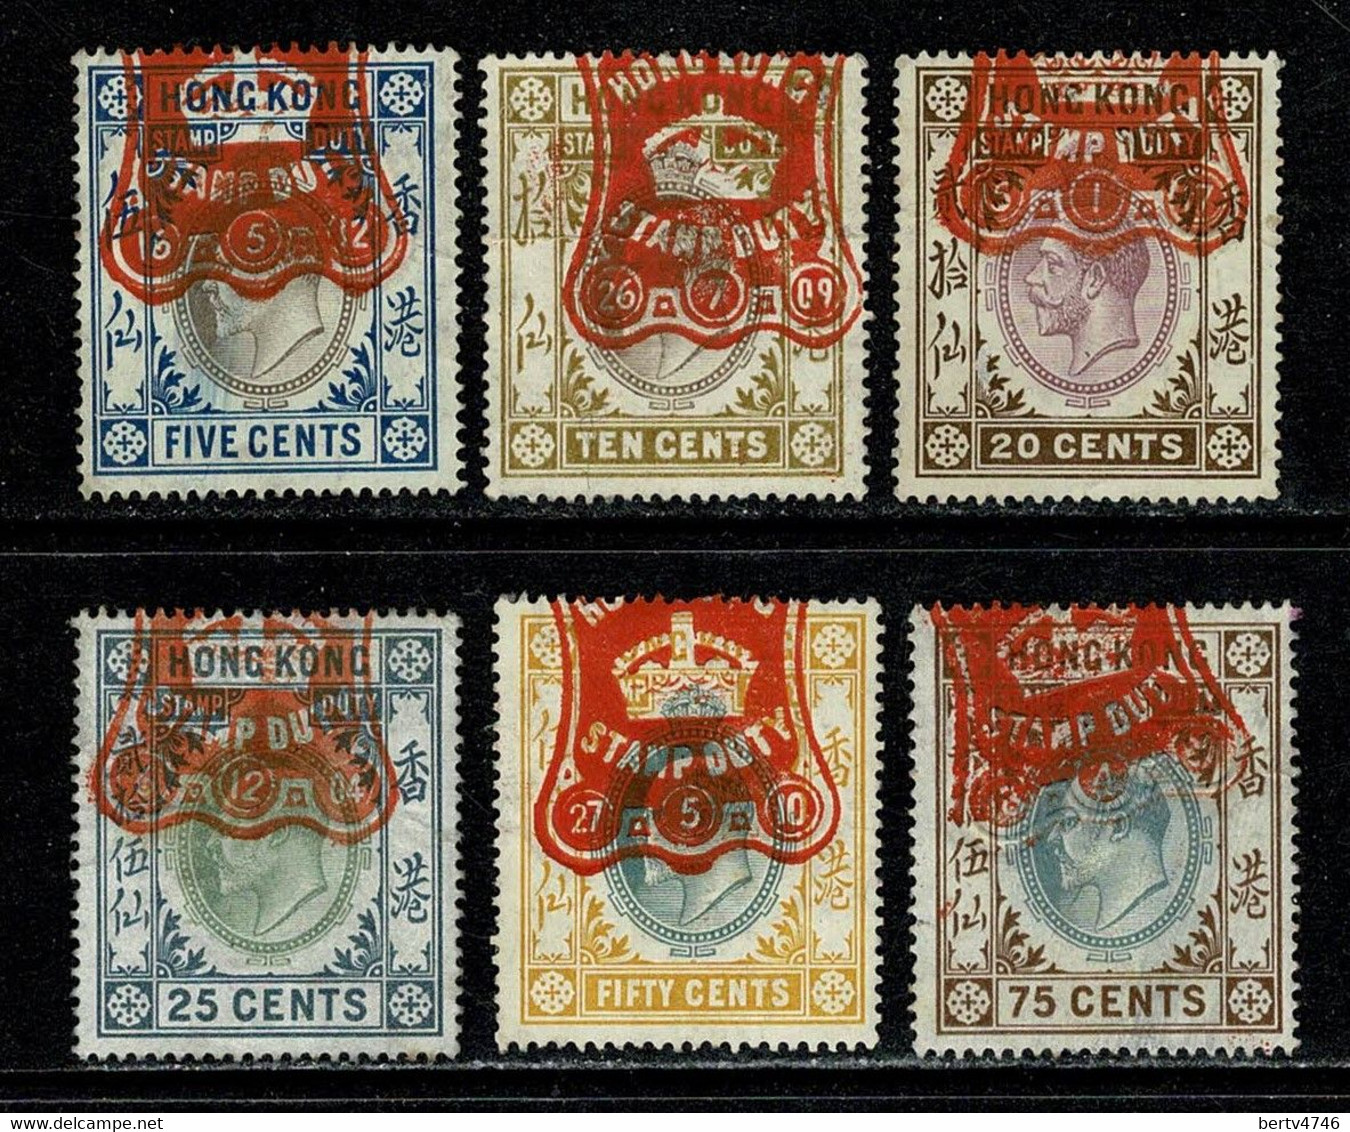 Hong Kong Stamp Duty Used Edward VII 5, 10, 20, 25, 50, 75 Cents - Sellos Fiscal-postal